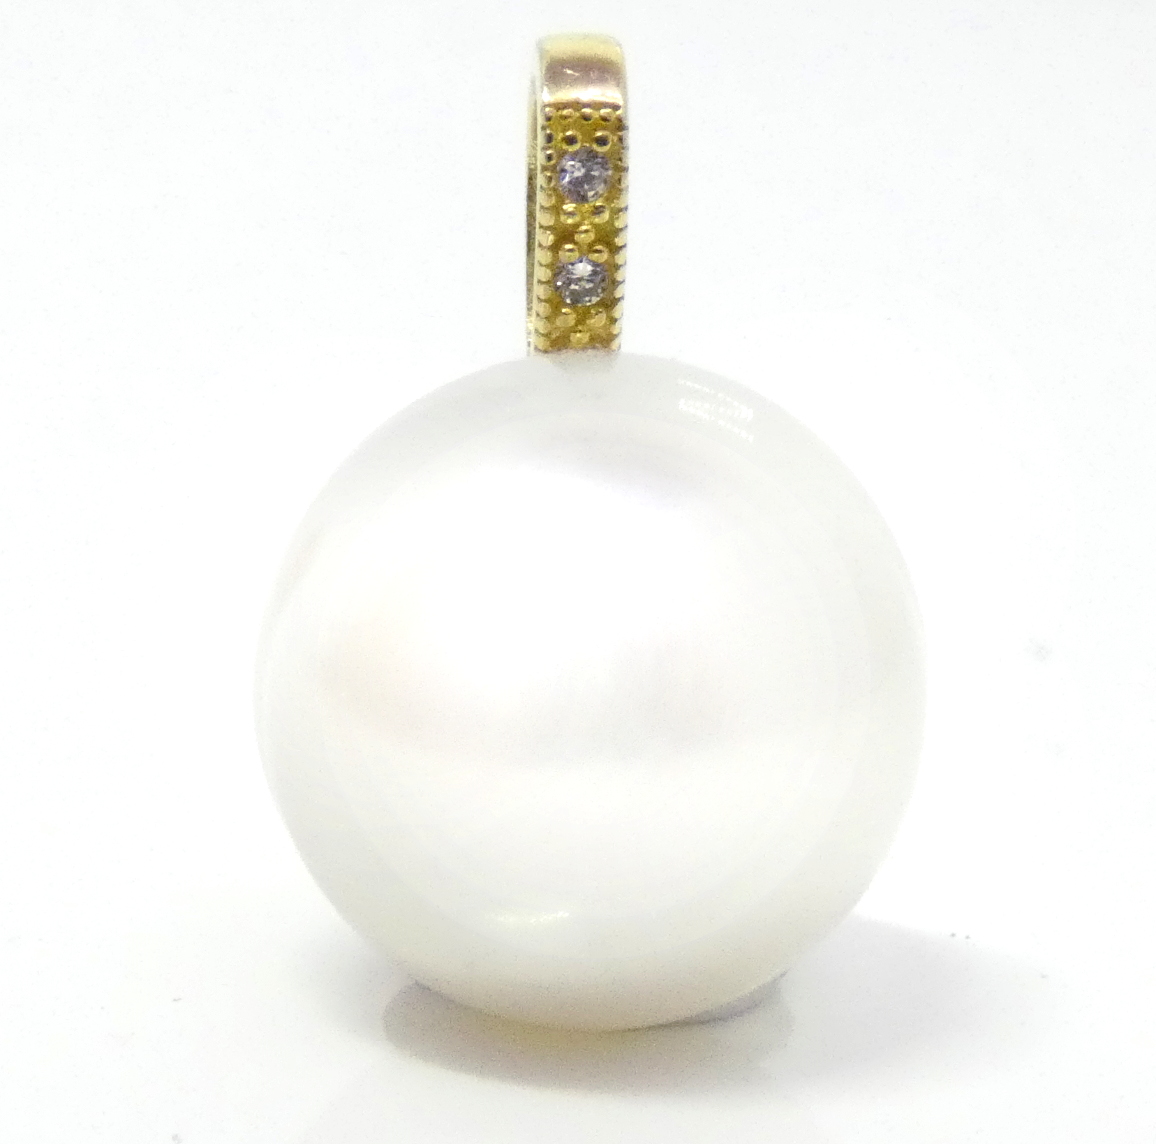 White South Seas Button Pearl Pendant